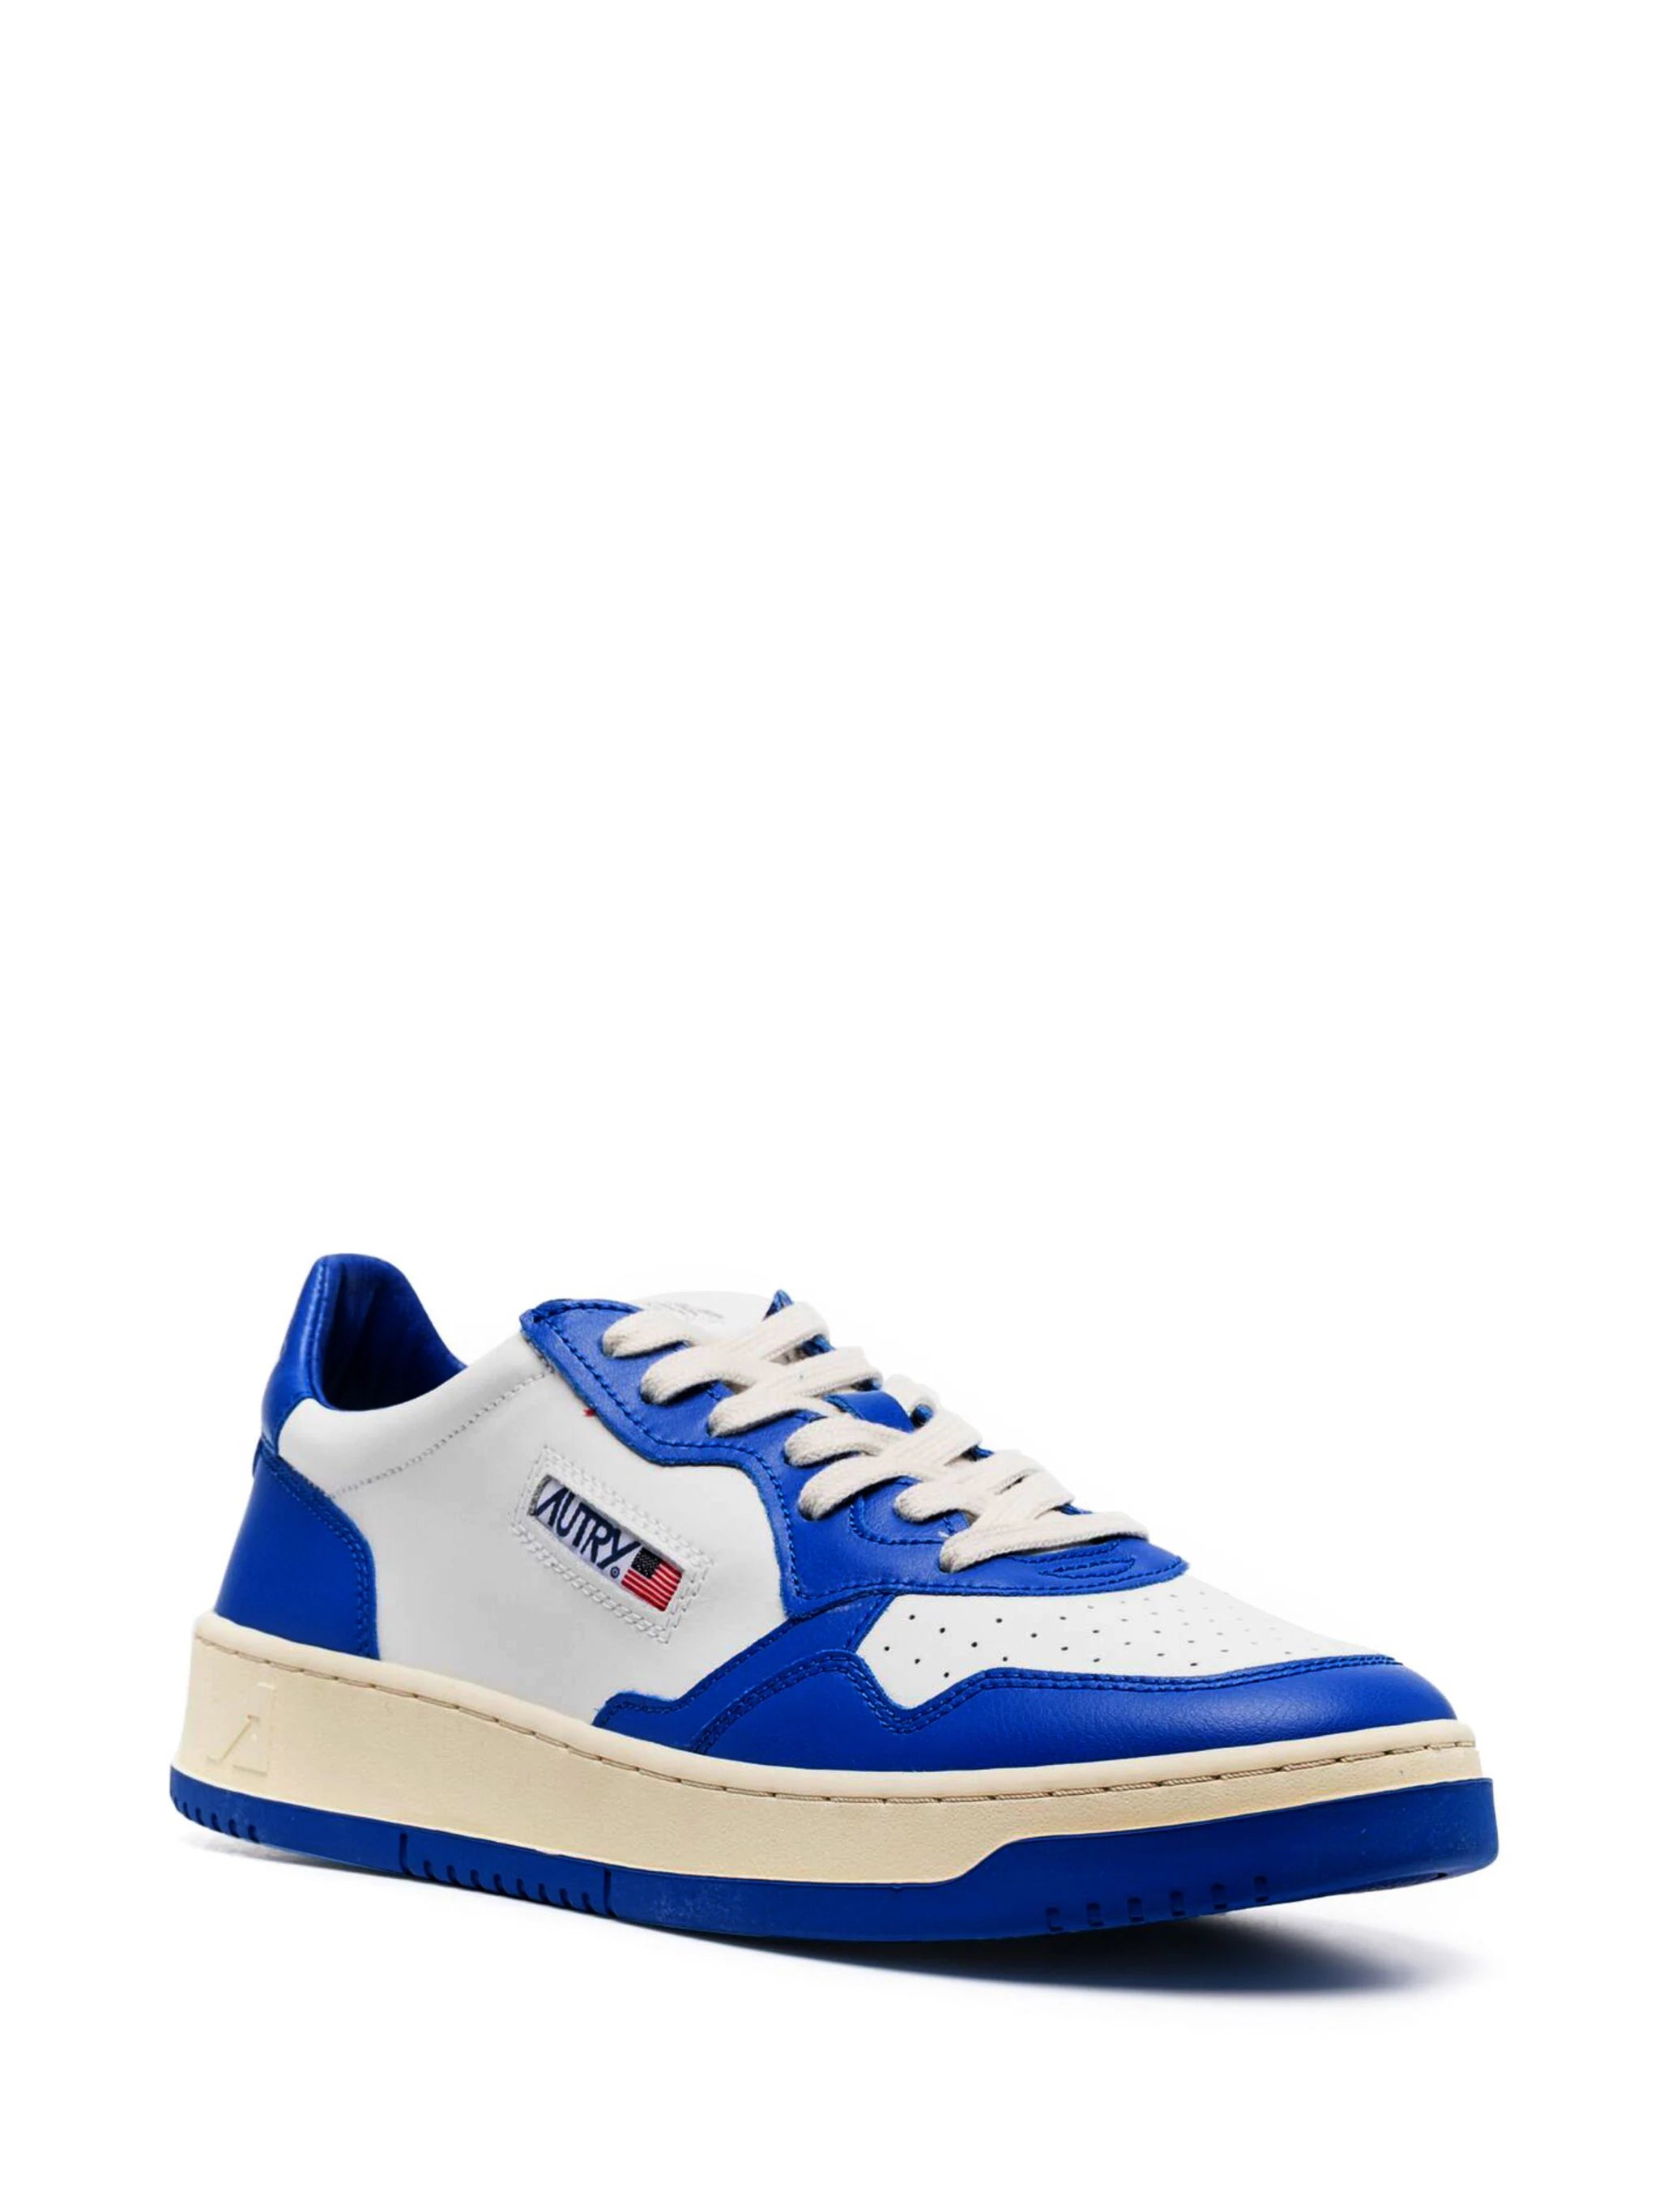 Autry sneakers bicolore bianco bluette - AULMWB15